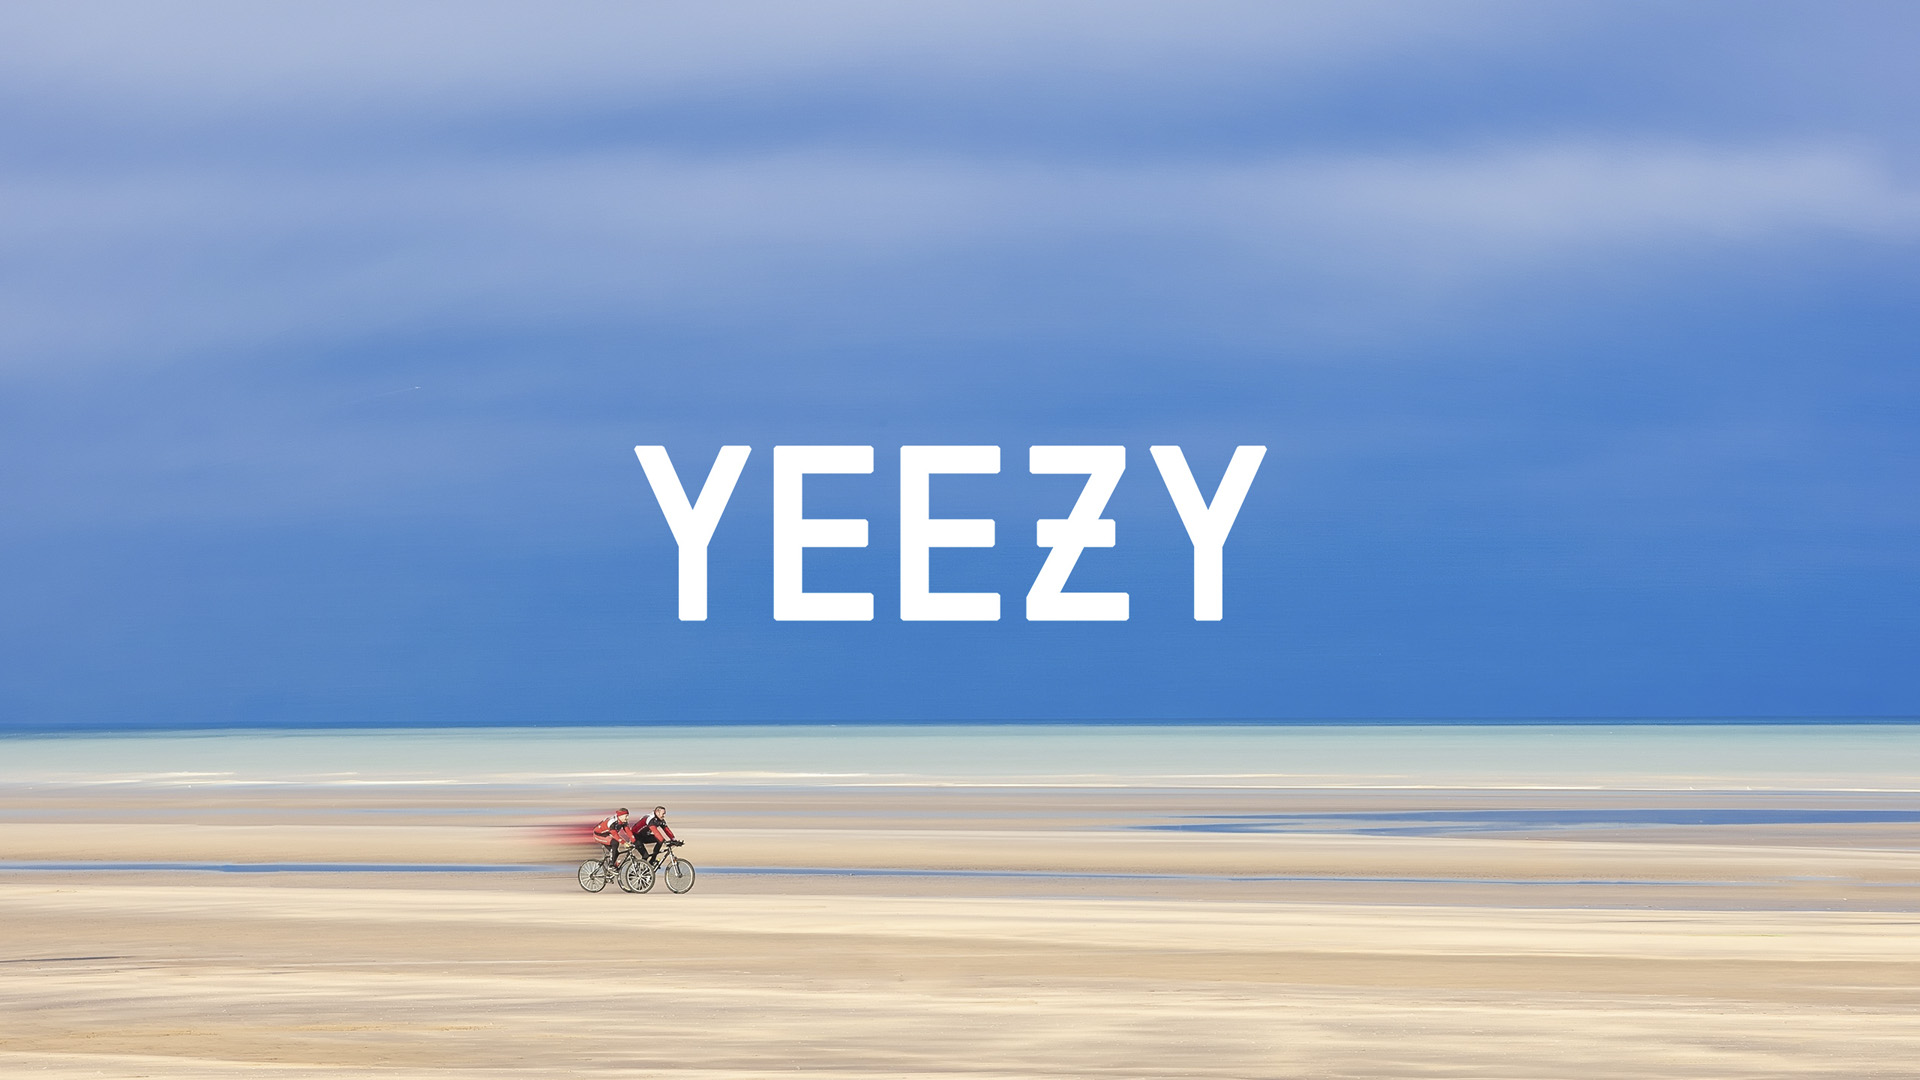 Yeezy Beach